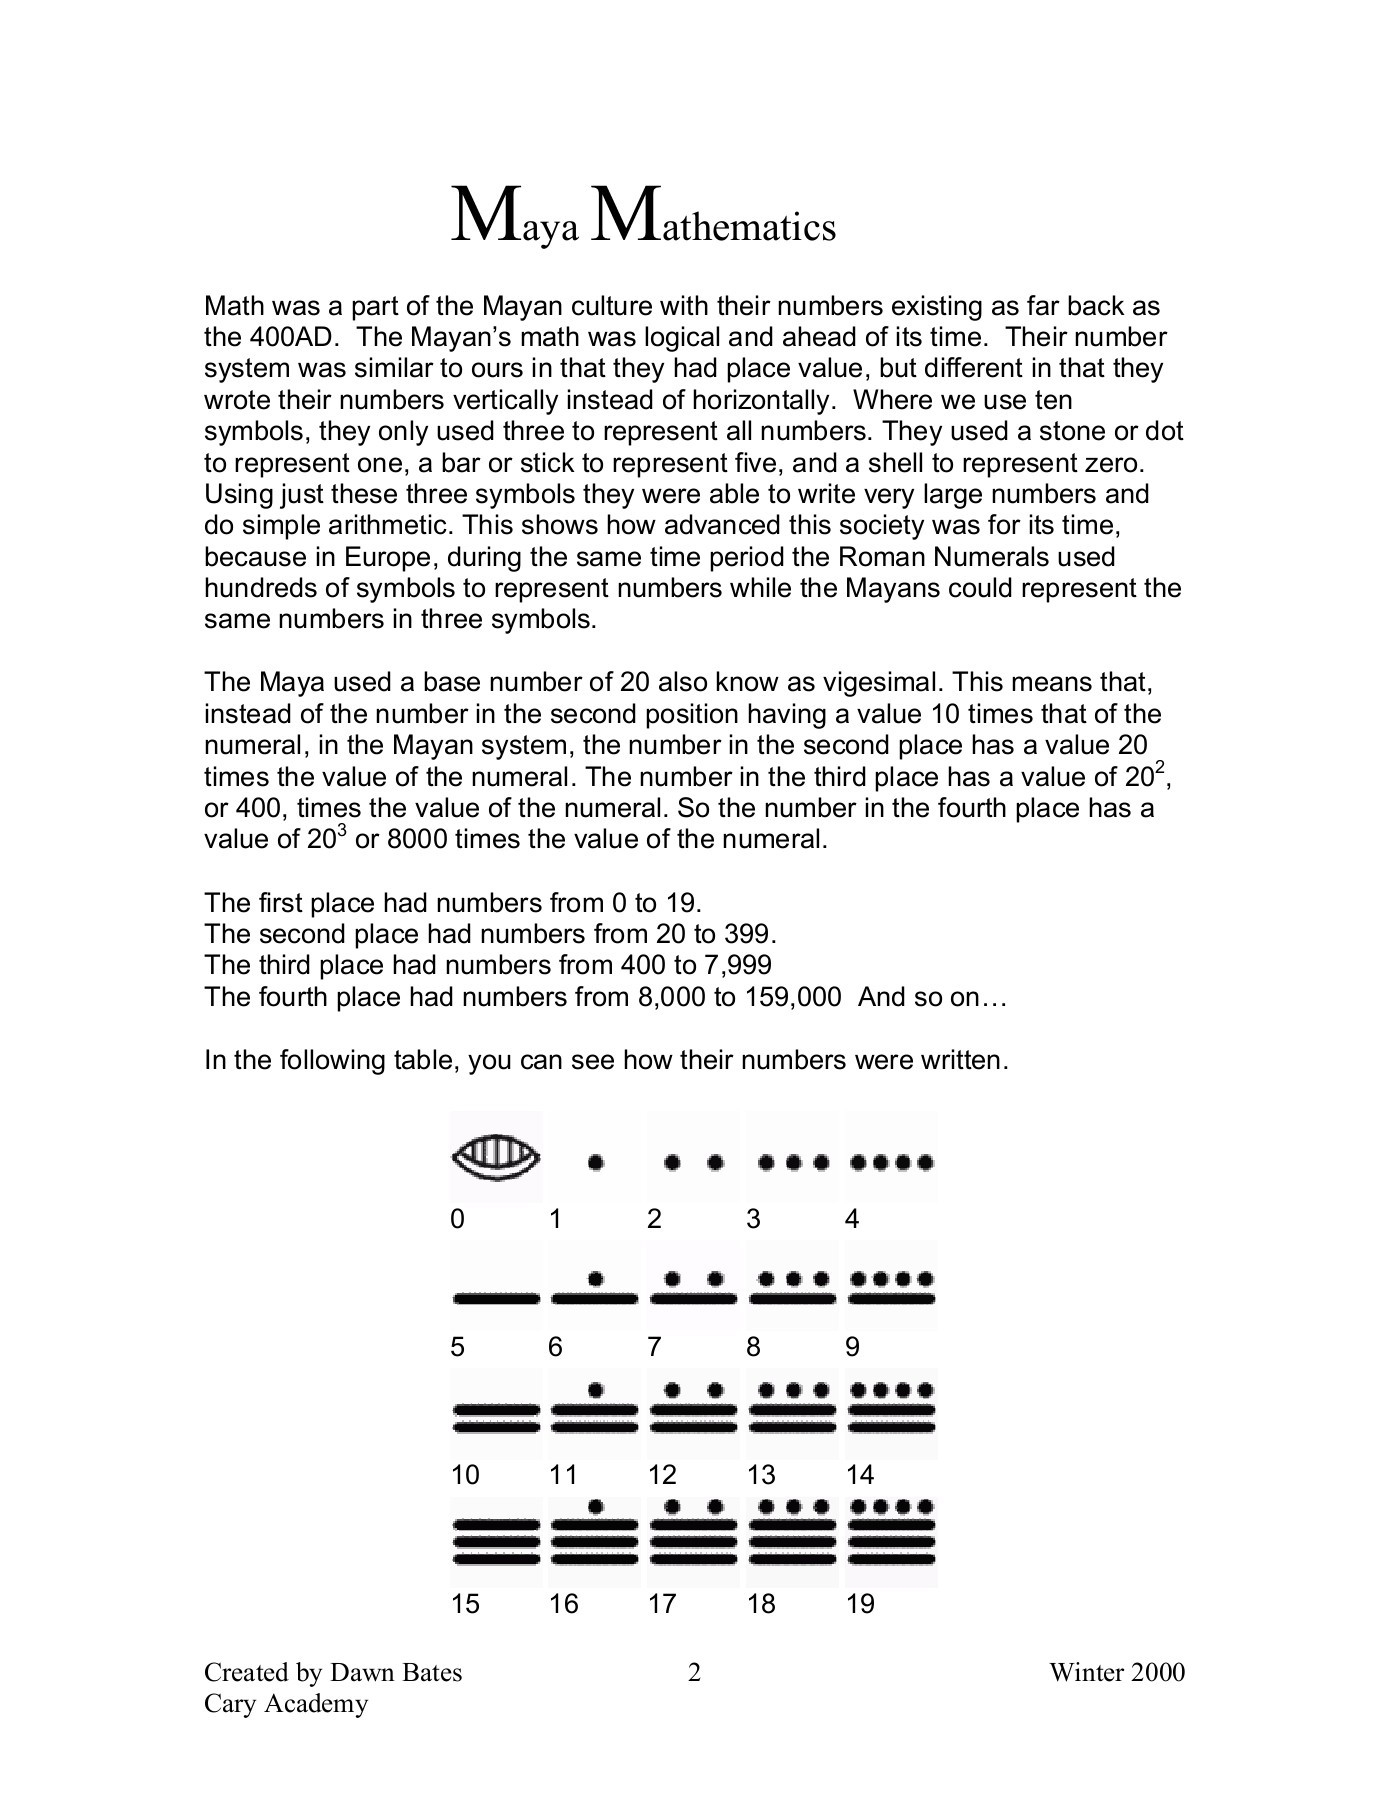 mayan-math-pages-1-13-flip-pdf-download-fliphtml5-math-worksheet-answers